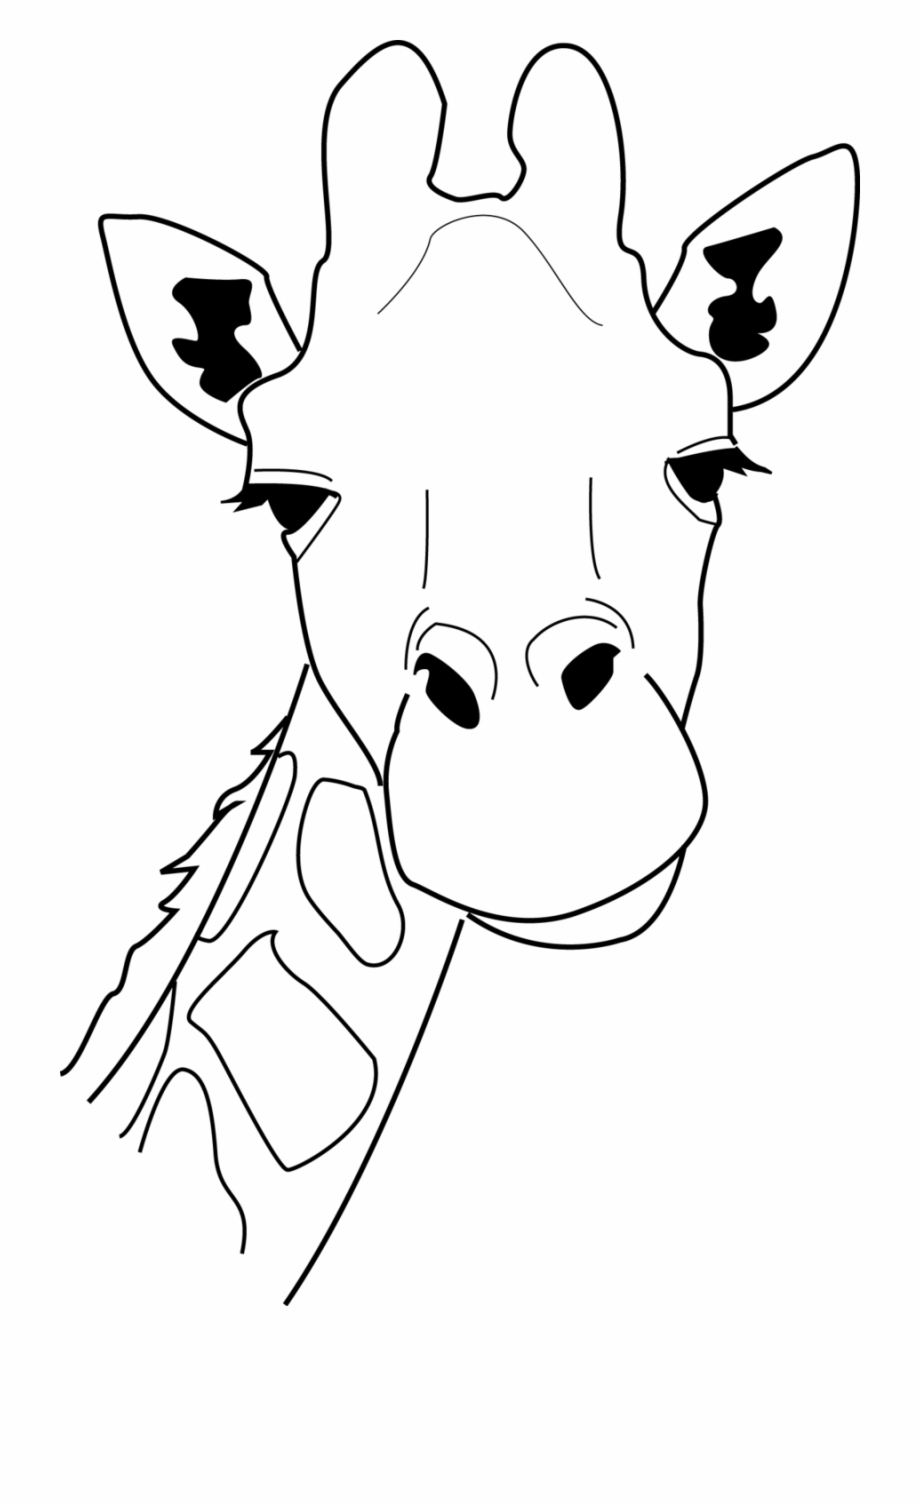 Giraffe Head Line Drawing 241412 9001 425 Pixels